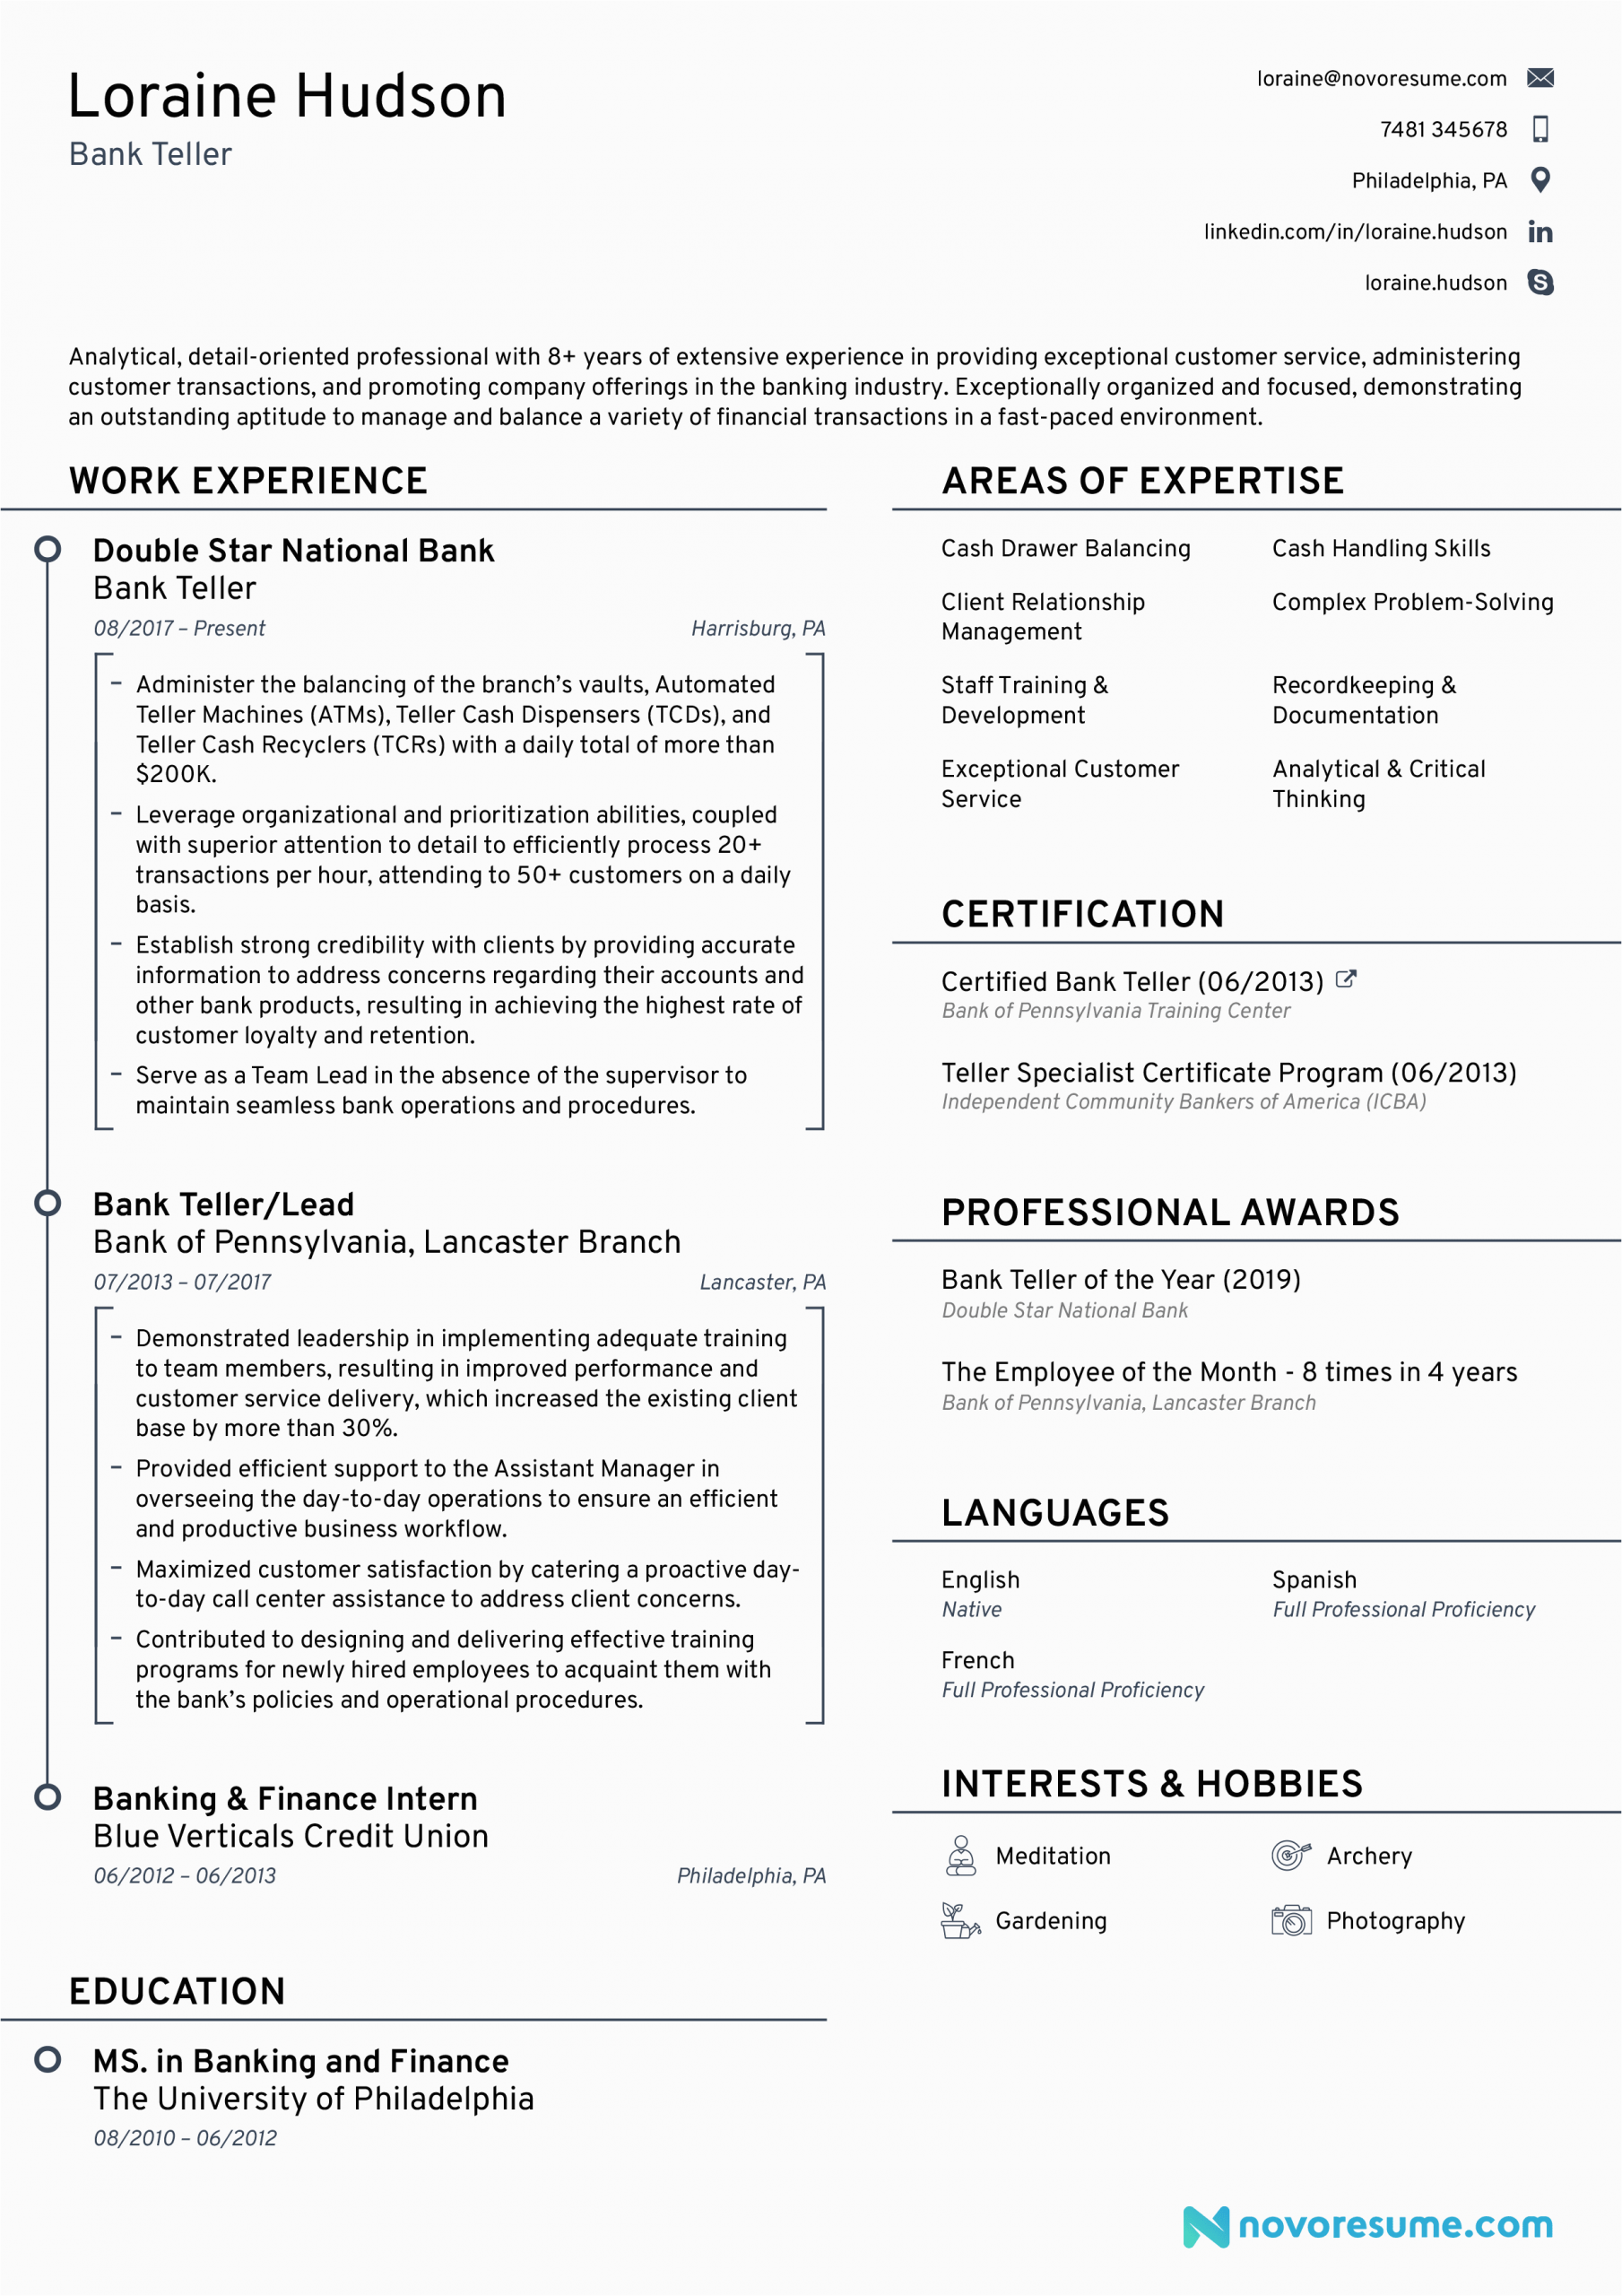 Resume Samples for Bank Teller Positions Bank Teller Resume Examples [updated for 2021]